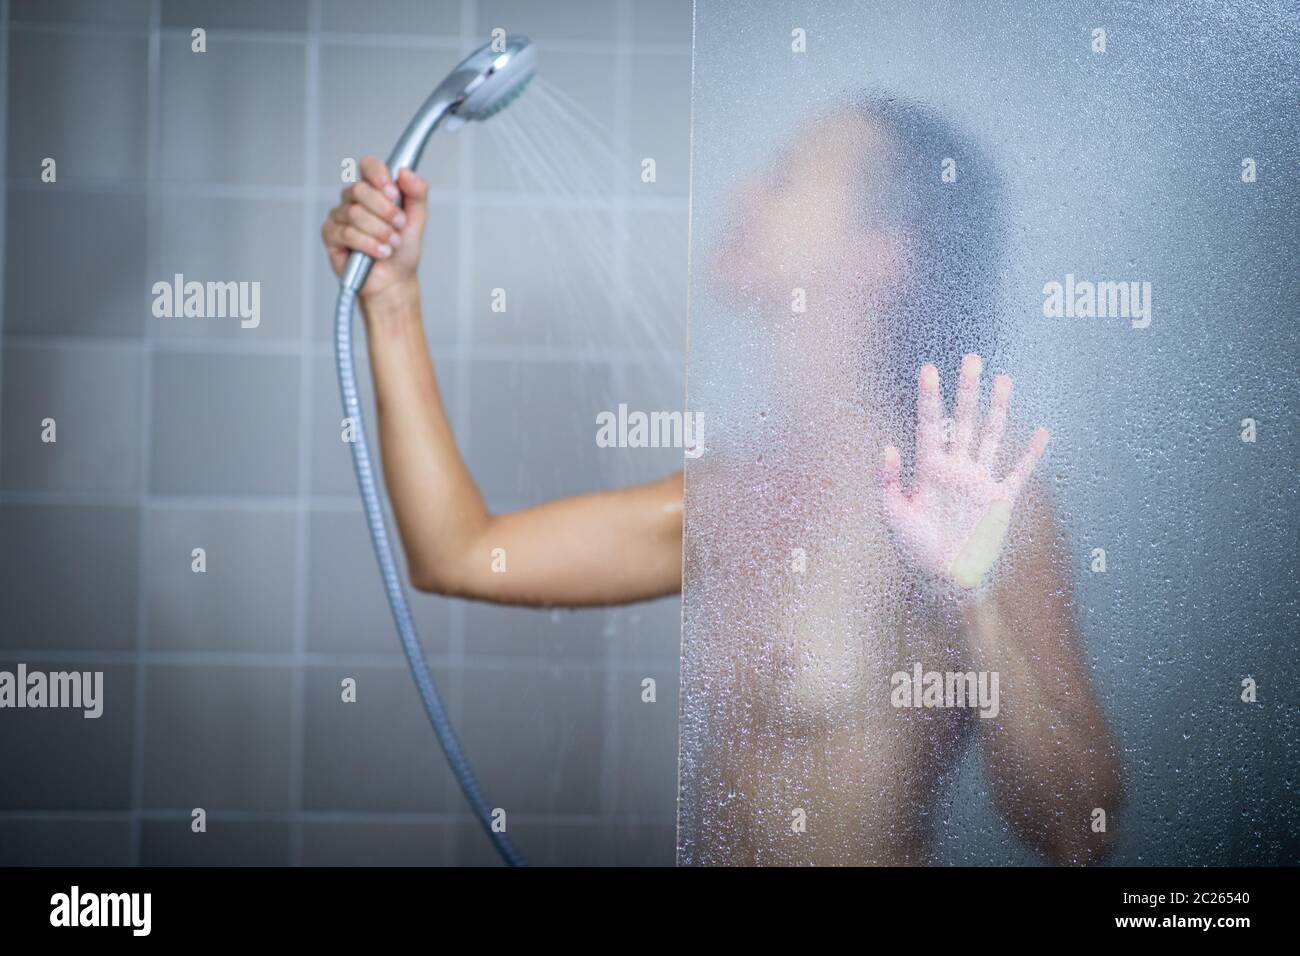 Alone shower gaiagraphy